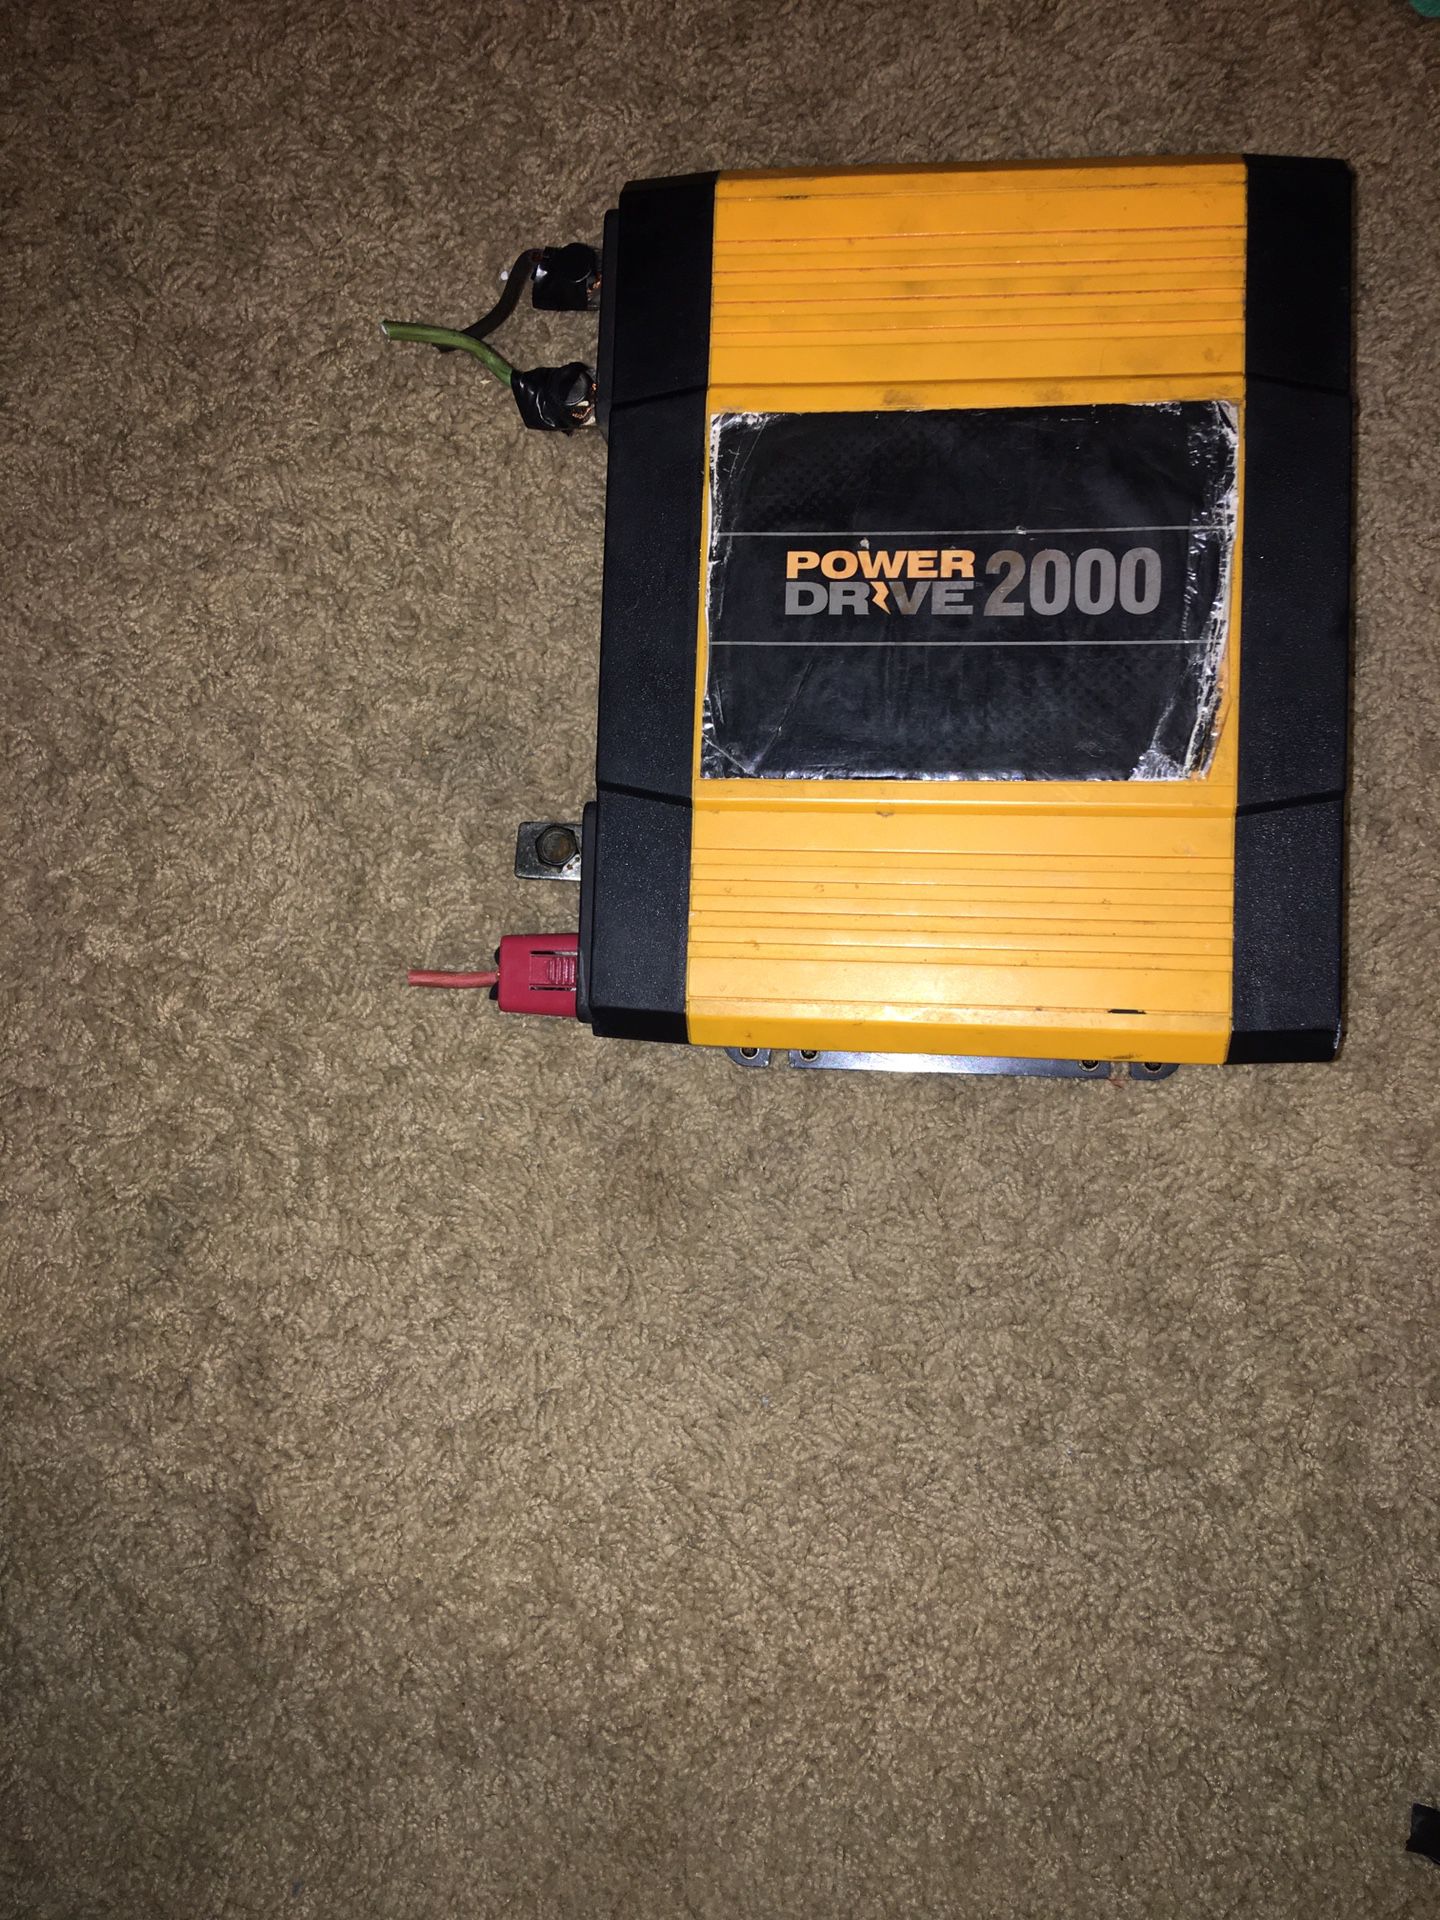 Power converter power Drive 2000